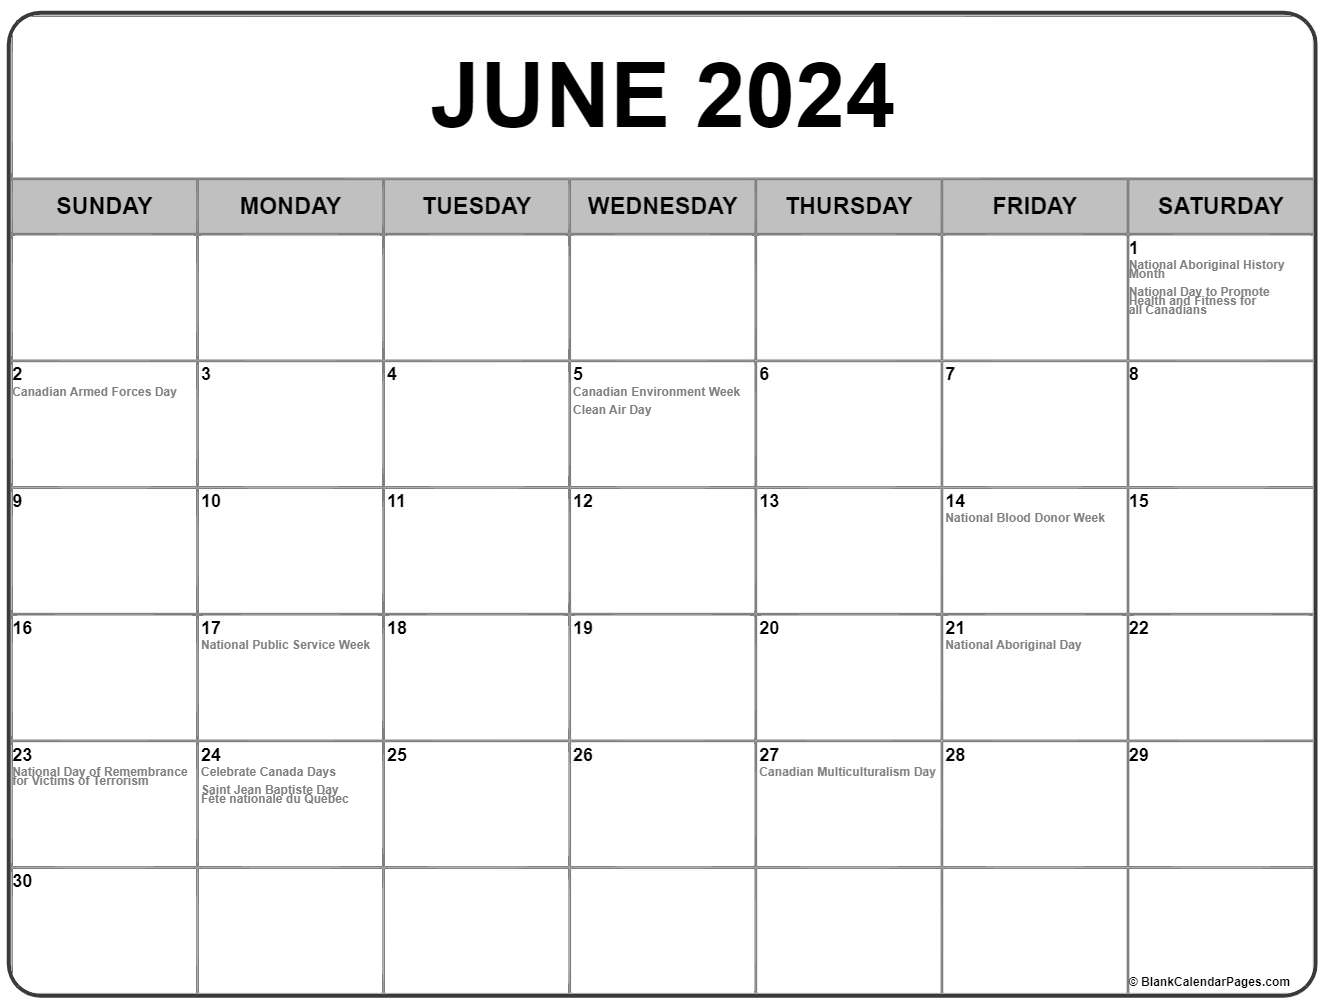 June 2021 calendar with holidays